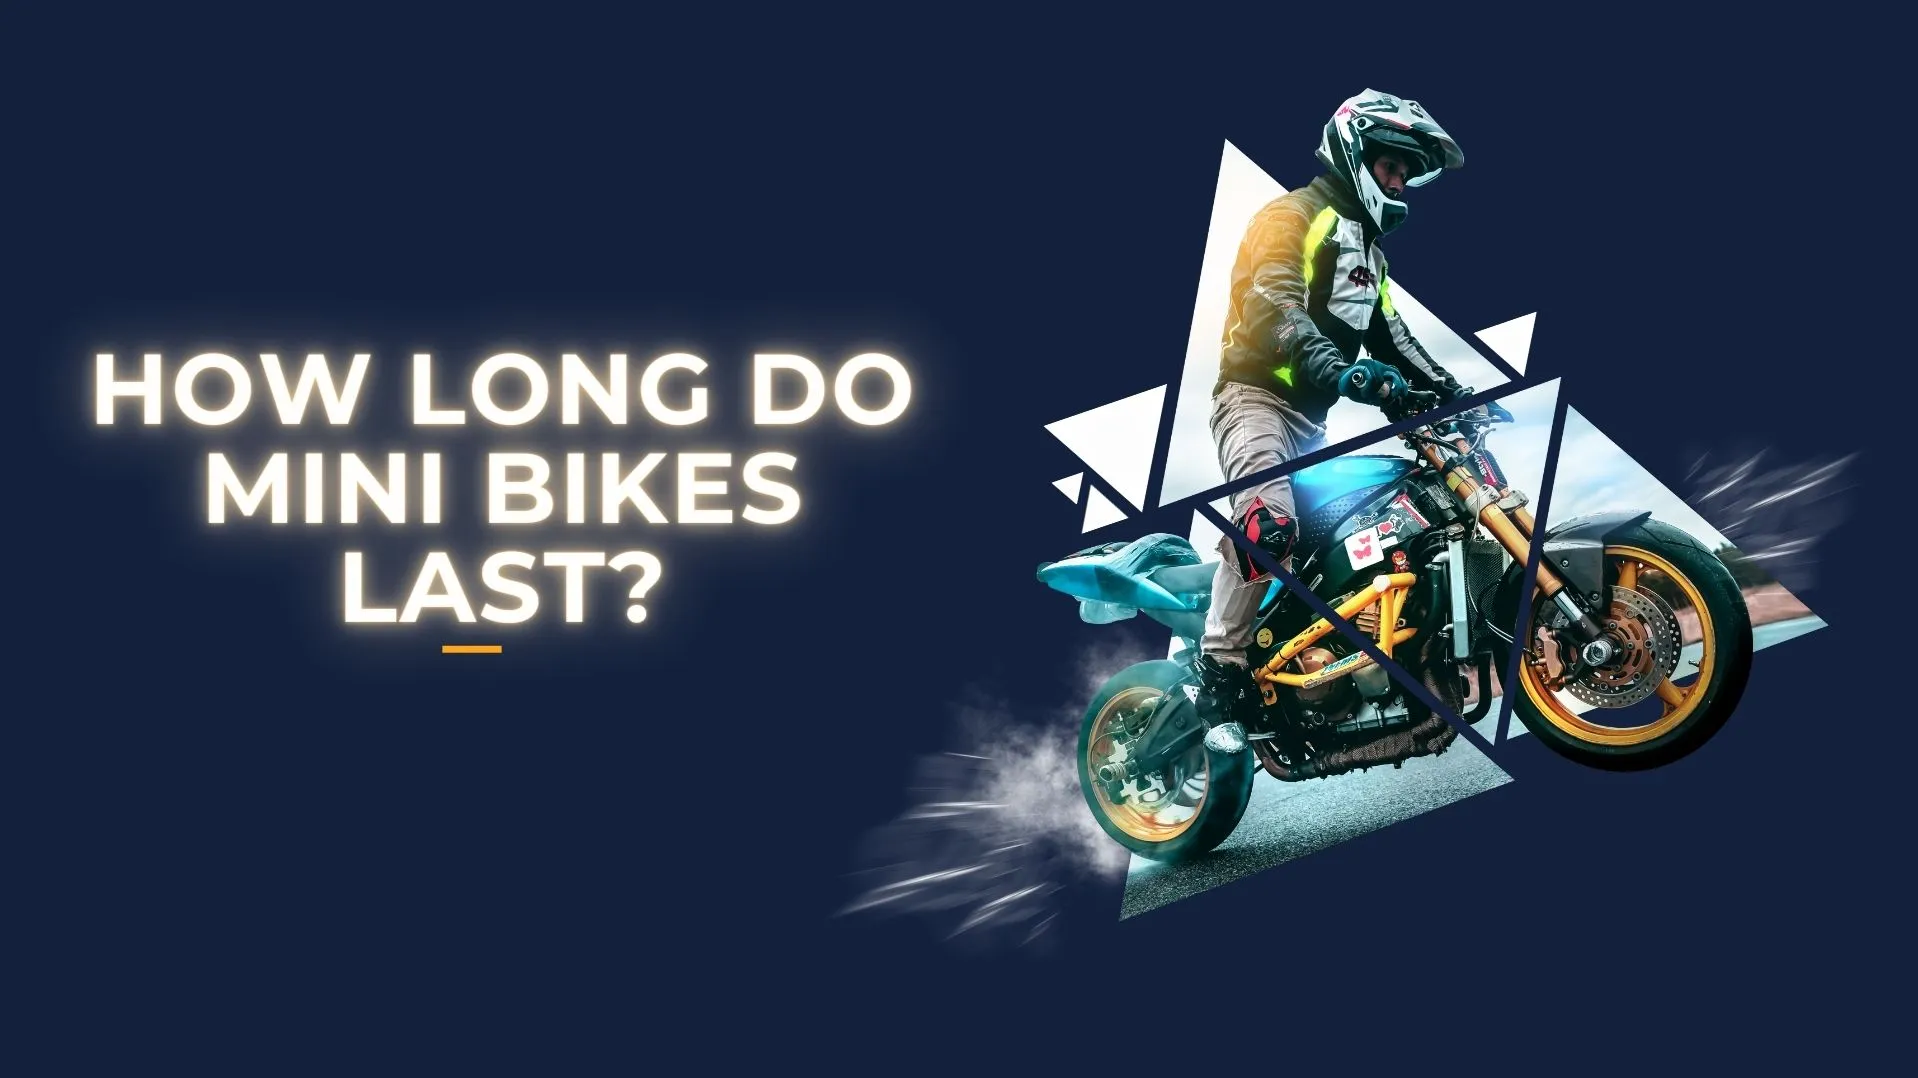 How Long Do mini bikes last